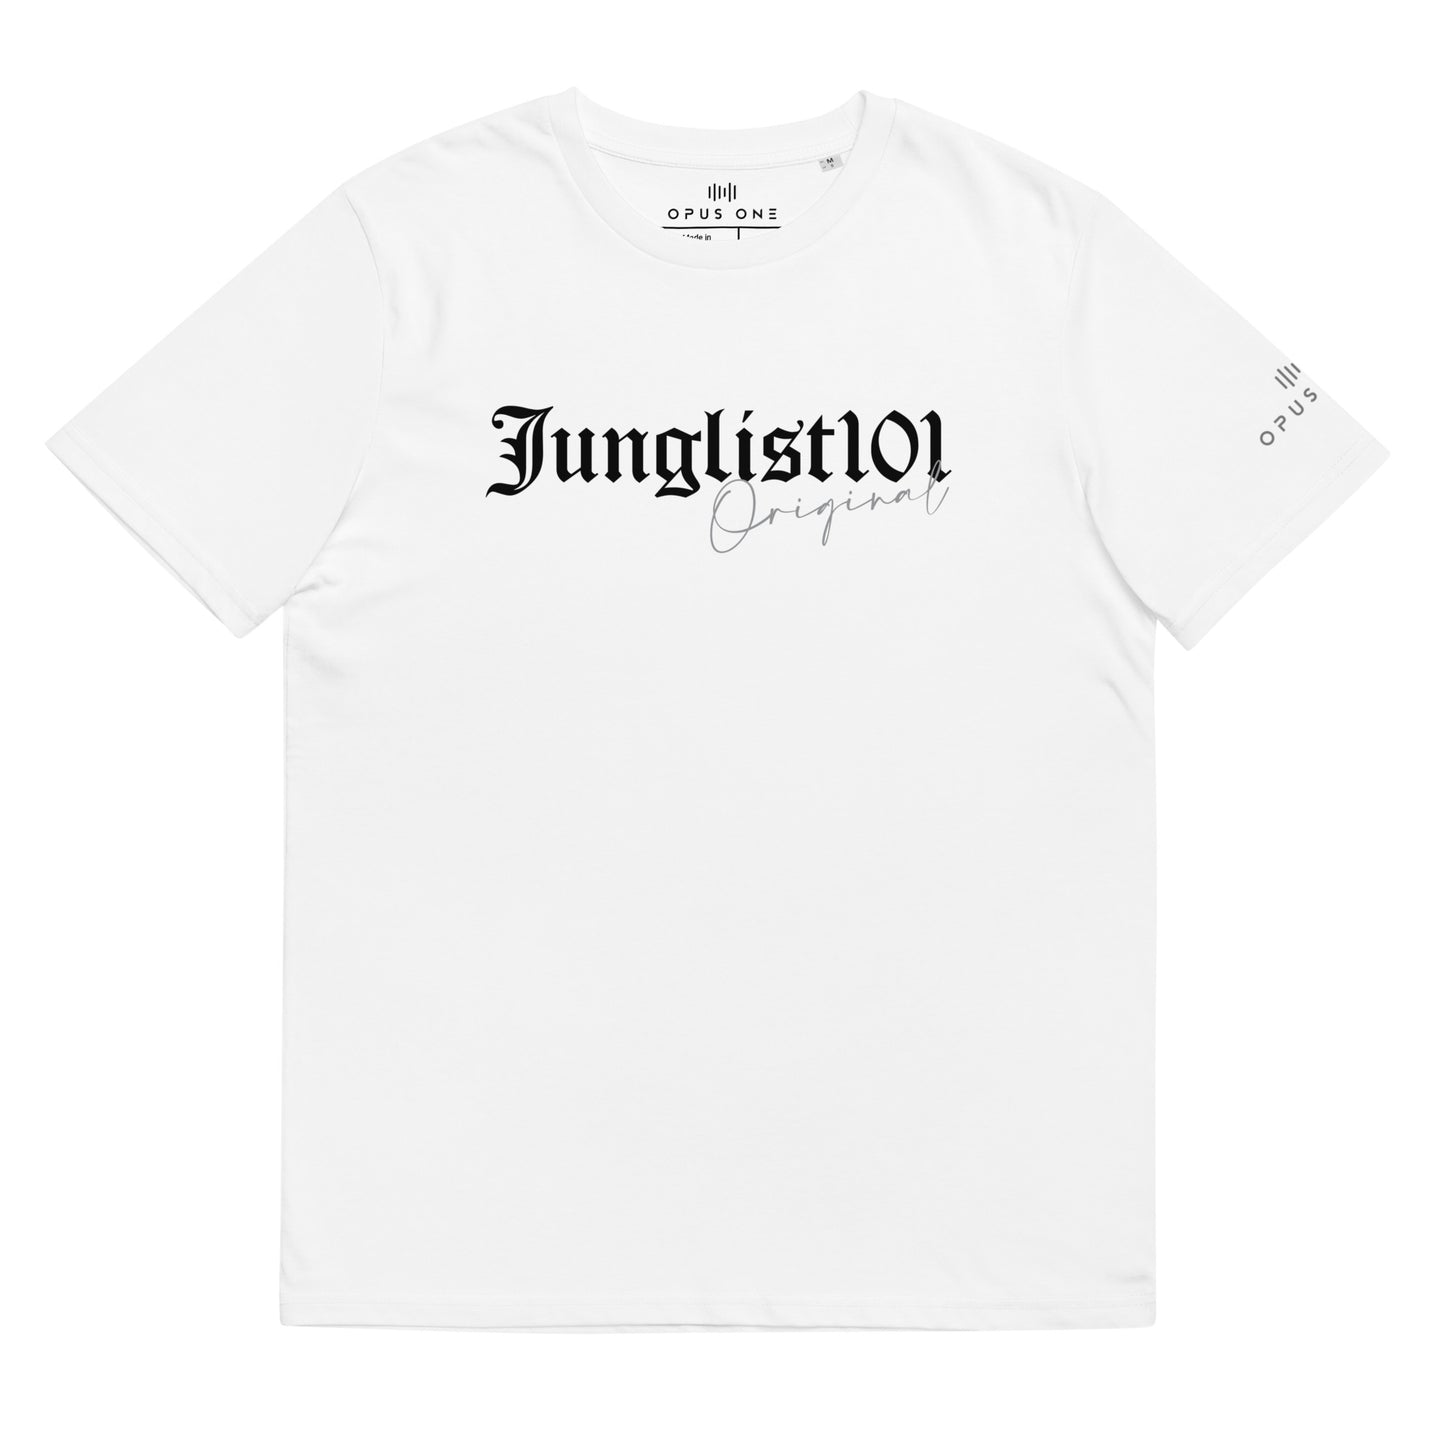 Junglist101 (Black Text) Unisex organic cotton t-shirt